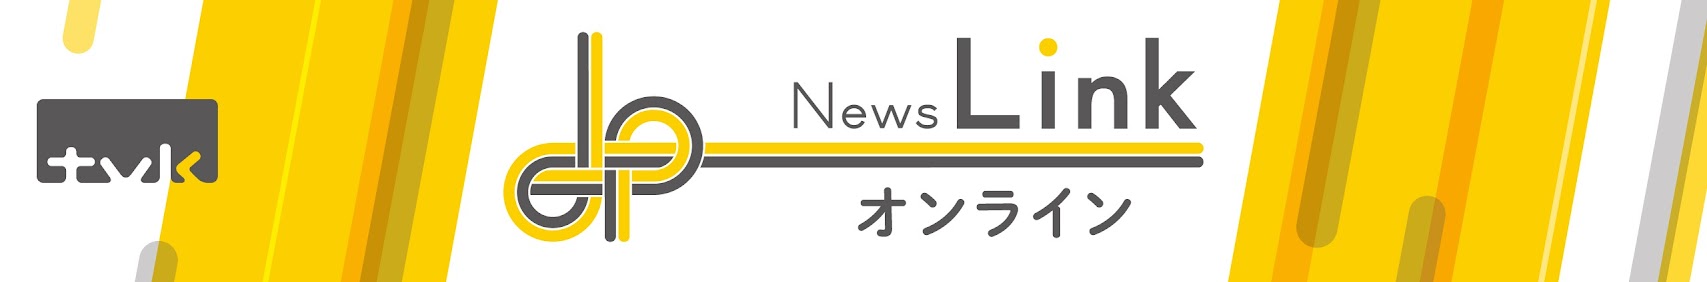 News Linkバナー